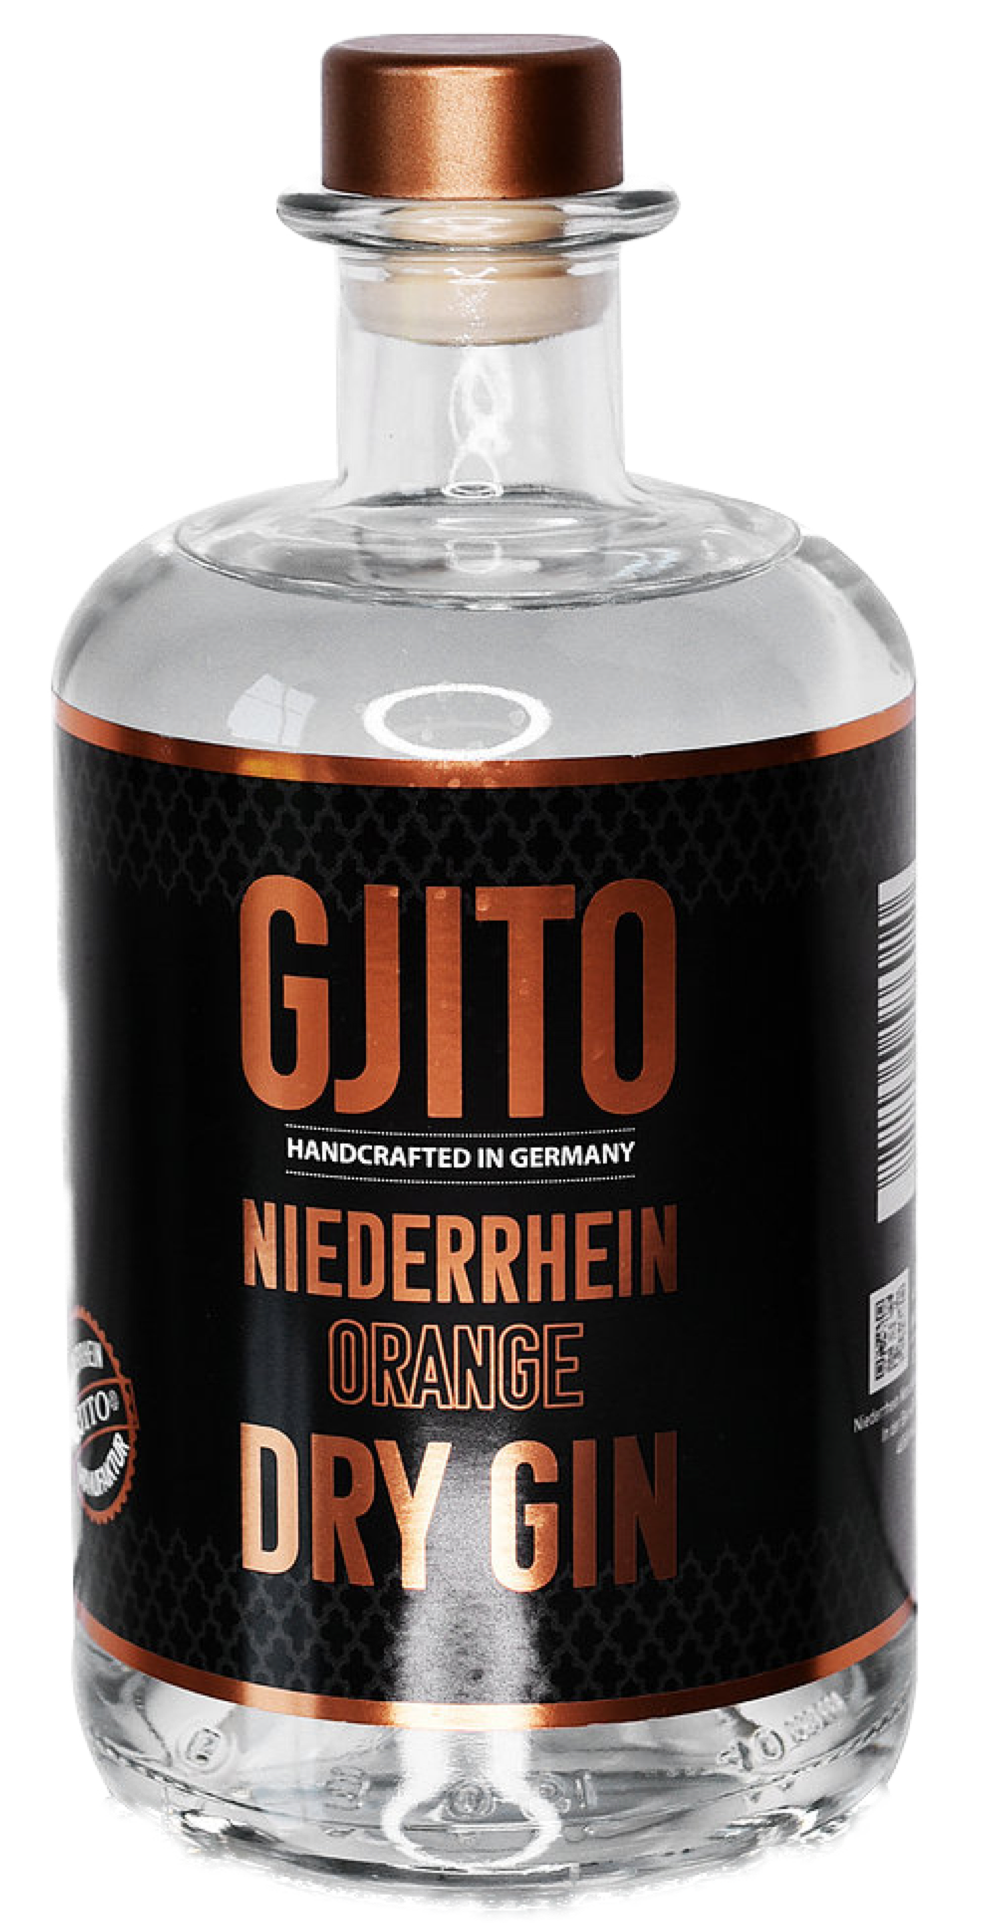 Gjito Orange Niederrhein Dry Gin 44% vol. 0,5L